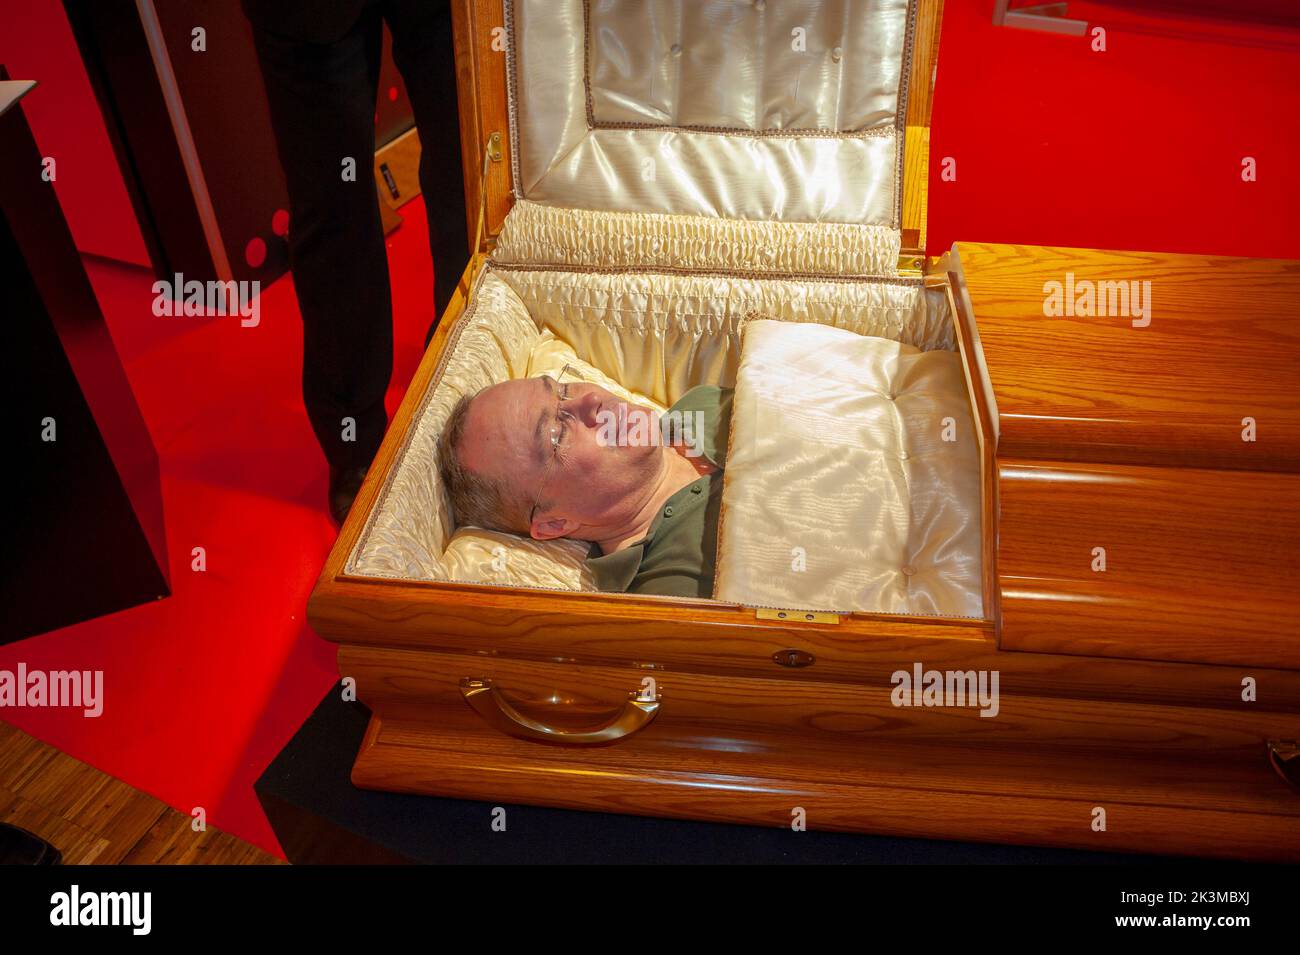 Paris, France, Man in a Casket on Display at Death Trade SHow 'Salon de la Mort' Stock Photo